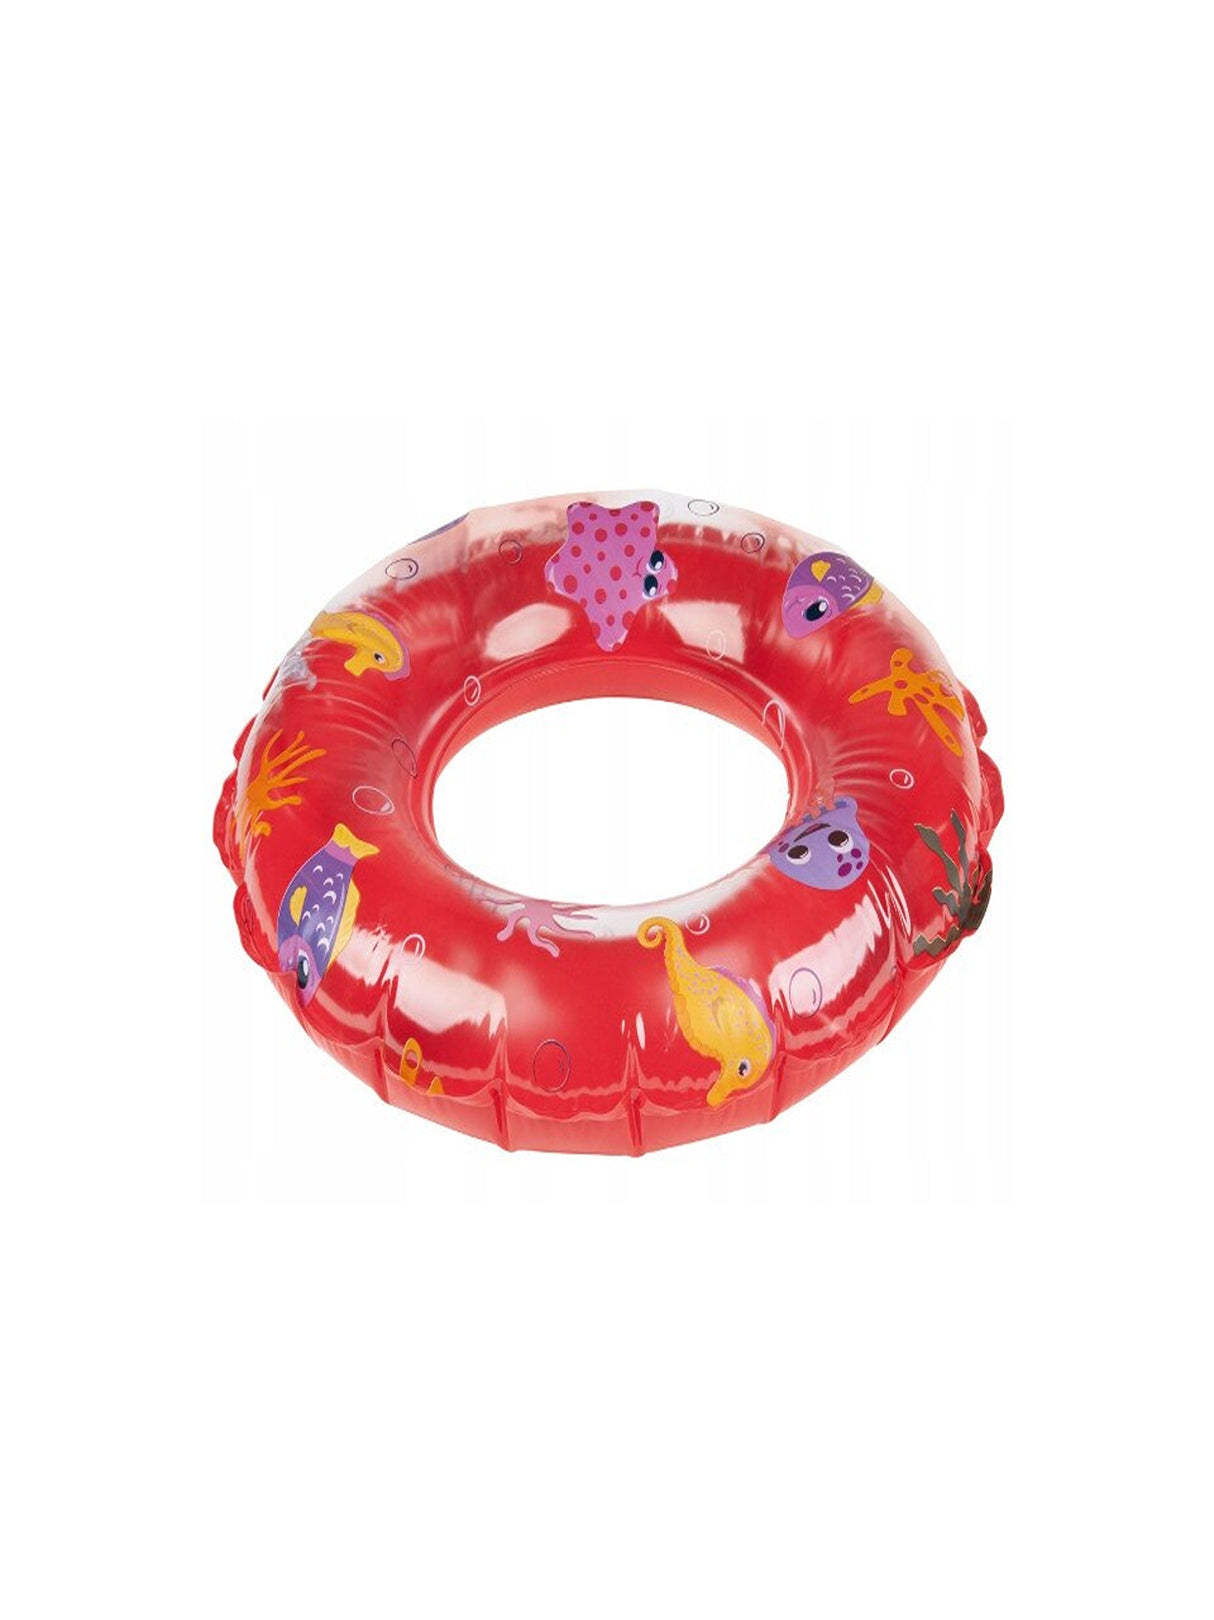 Image for Children'S Inflatable Float Wheel